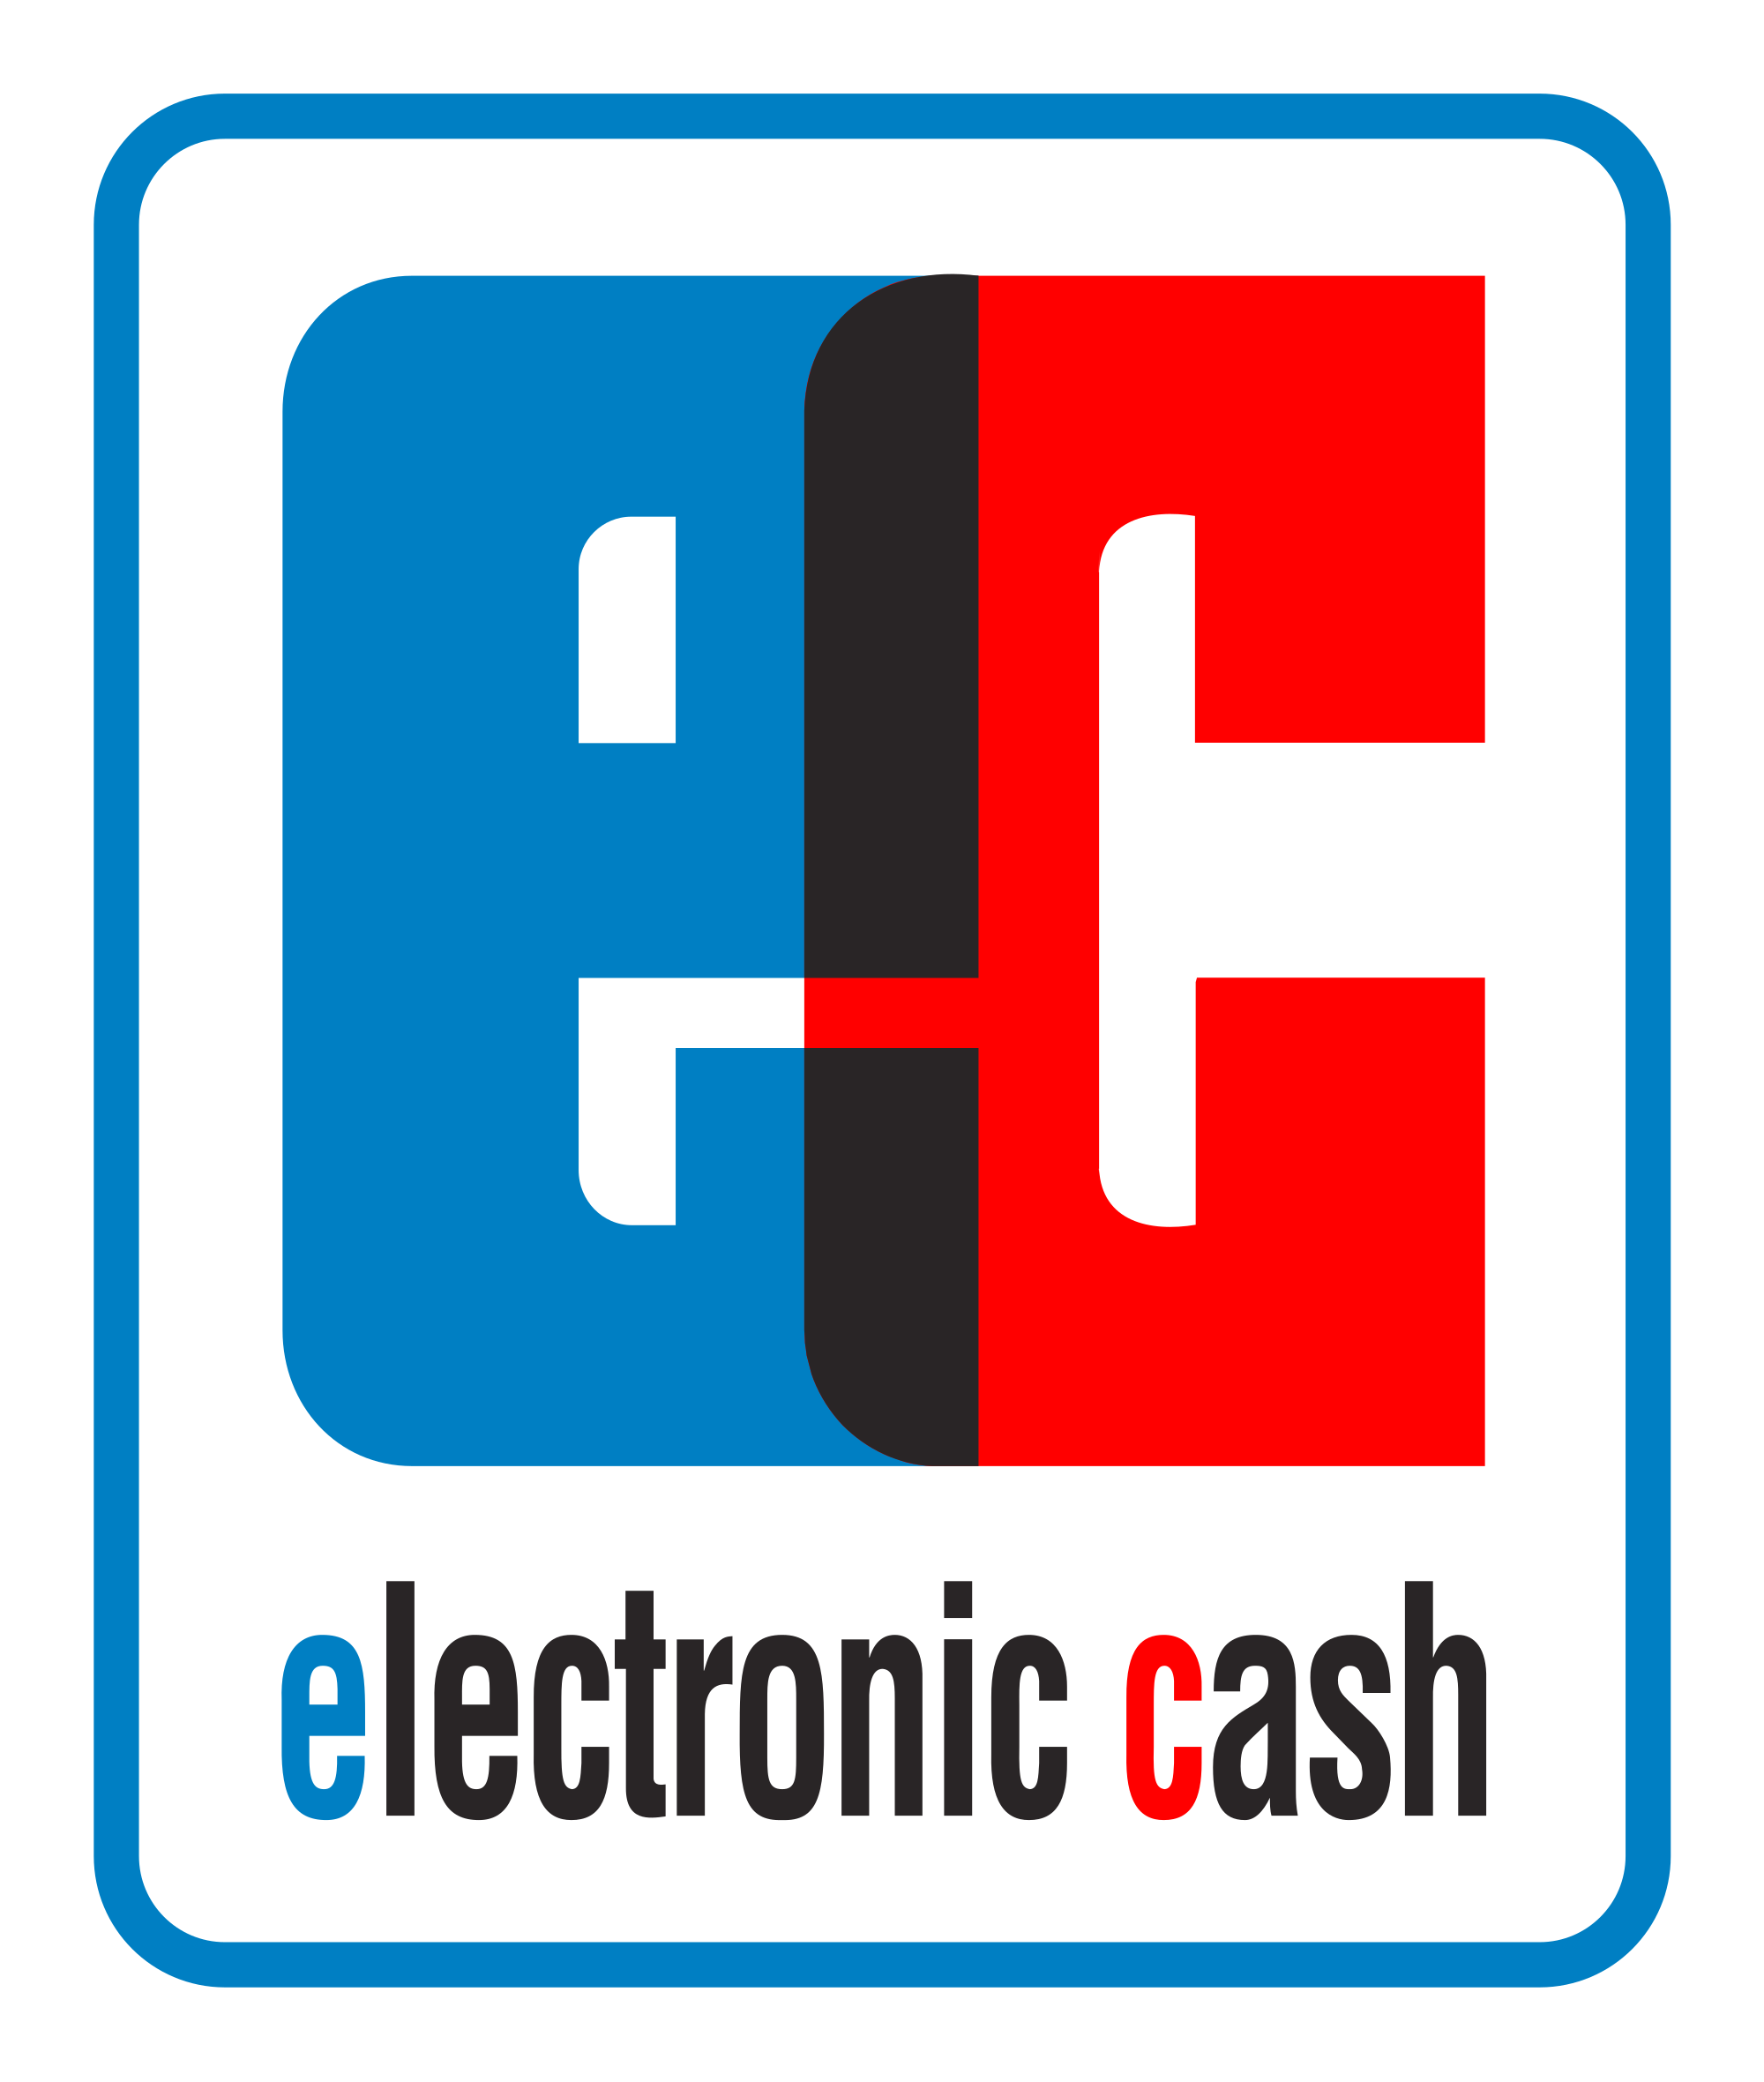 EC - Electronic Cash